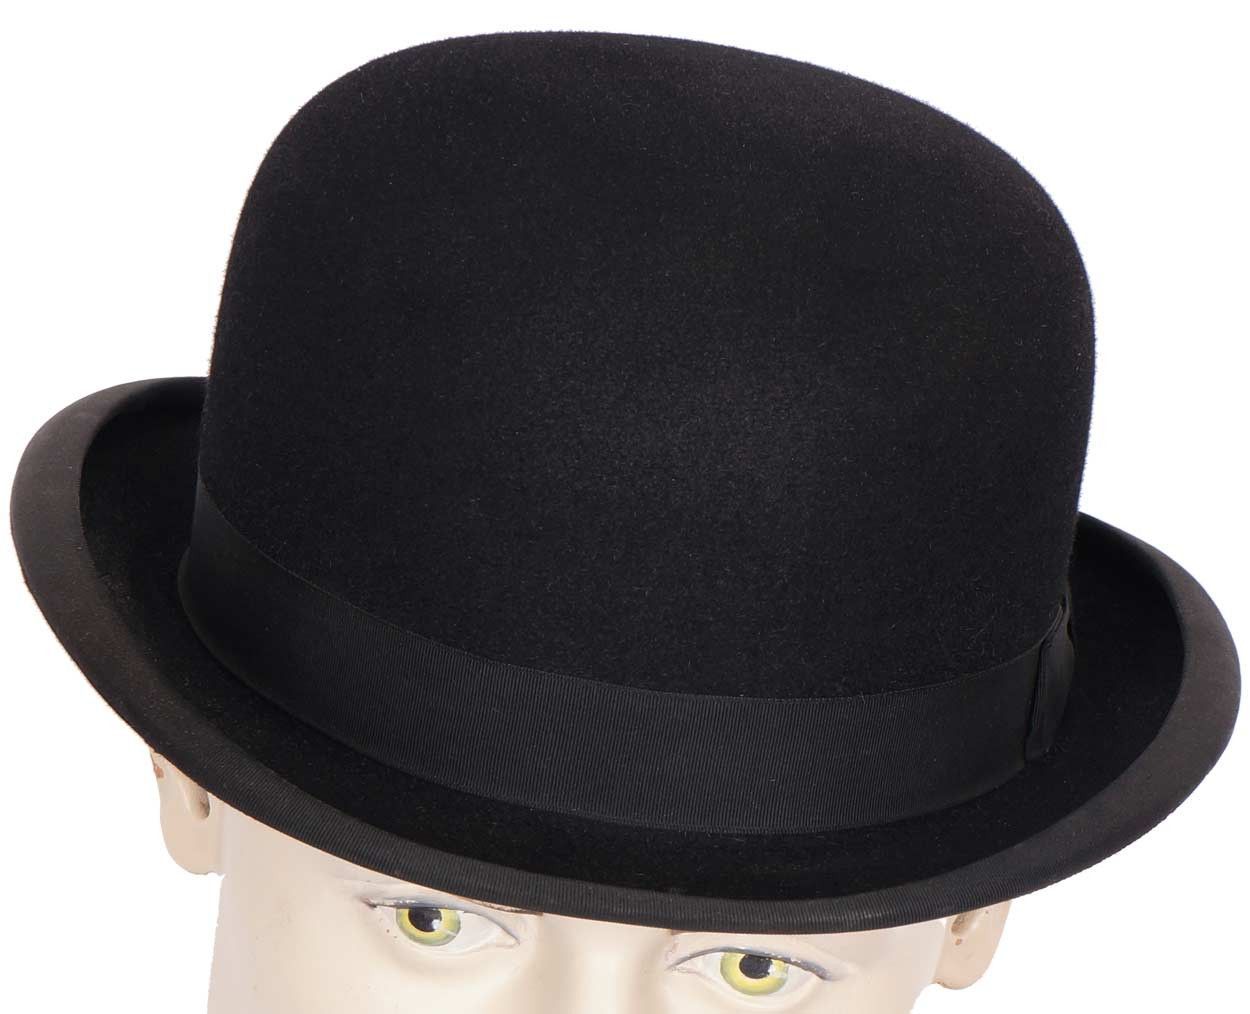 Мужская шляпа сканворд 7. Котелок шляпа 19 век. Боулер дерби шляпа. Шляпа котелок мужская 19 века. Мужские английские котелки шляпы 19 века.